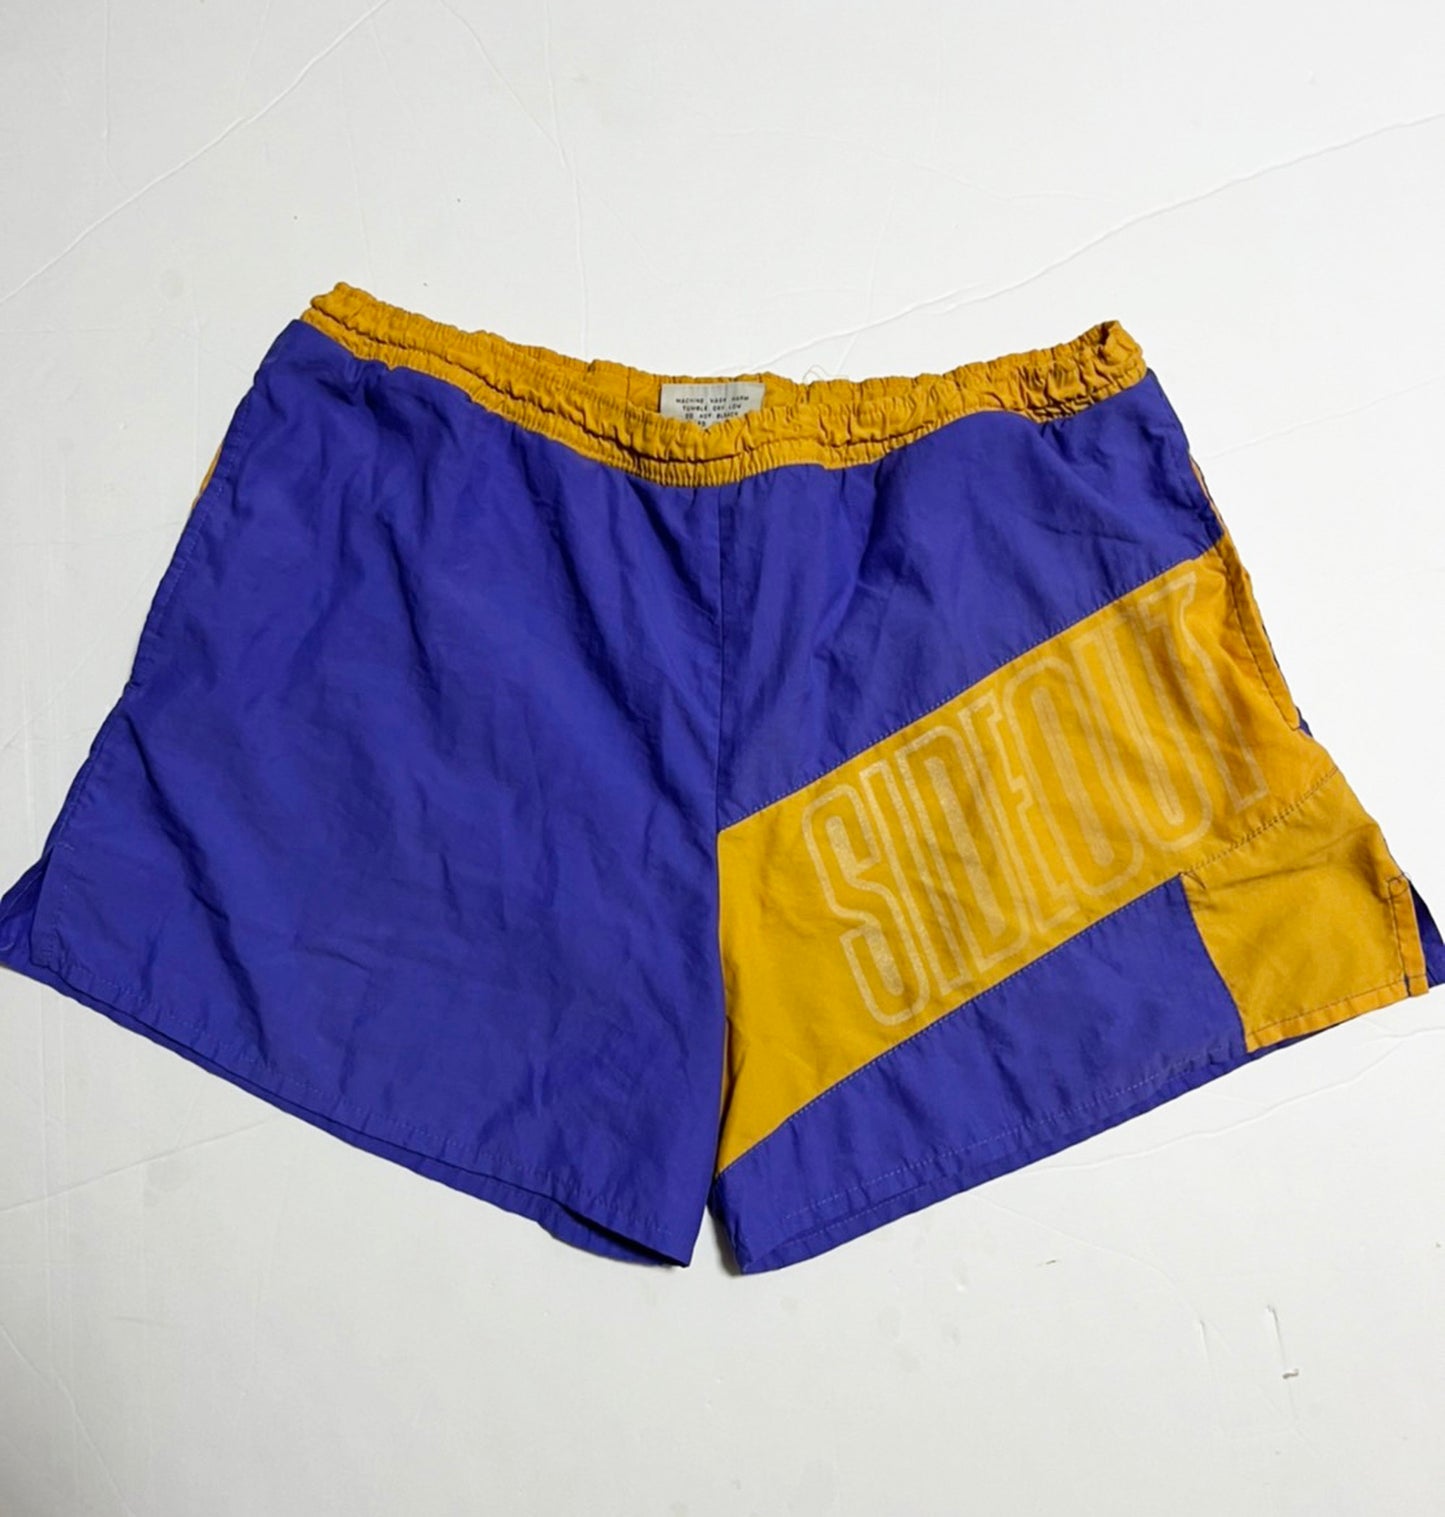 【EURO vintage】90's sideout sports wear  水陸両用 ビーチショーツ ショートパンツ【men's M】